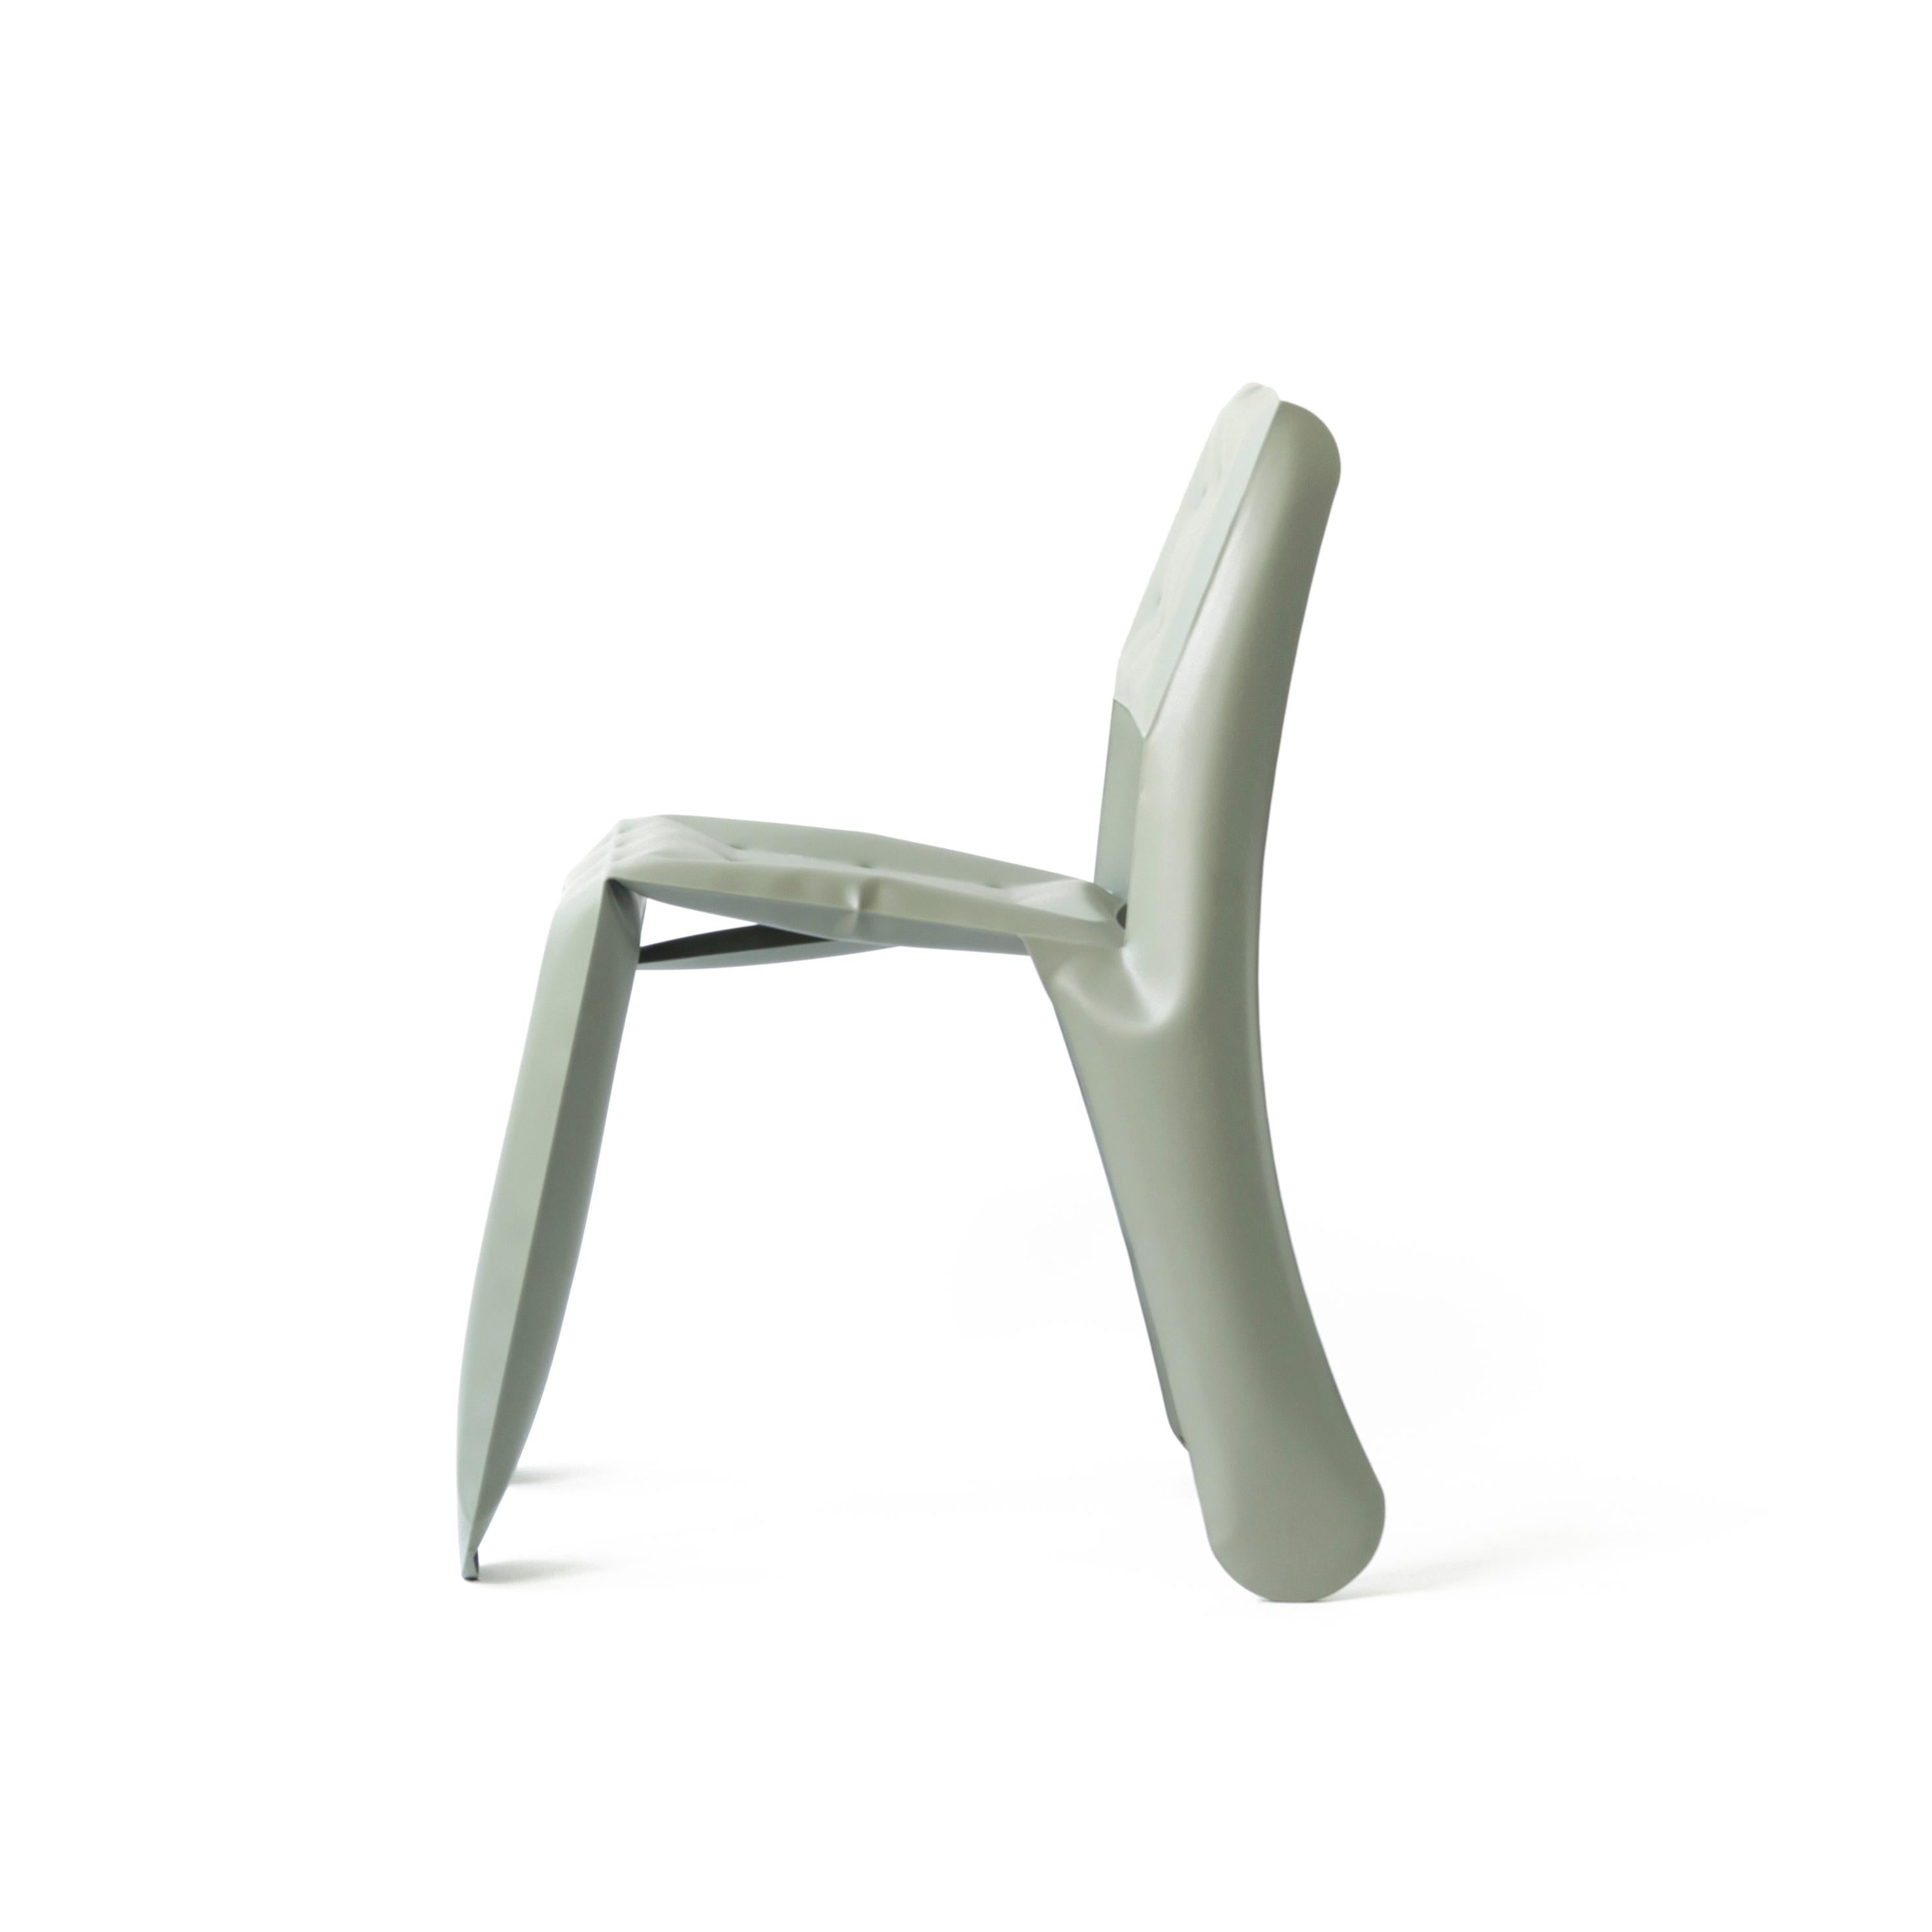 Polish Moss Grey Carbon Steel Chippensteel 0.5 Sculptural Chair by Zieta For Sale